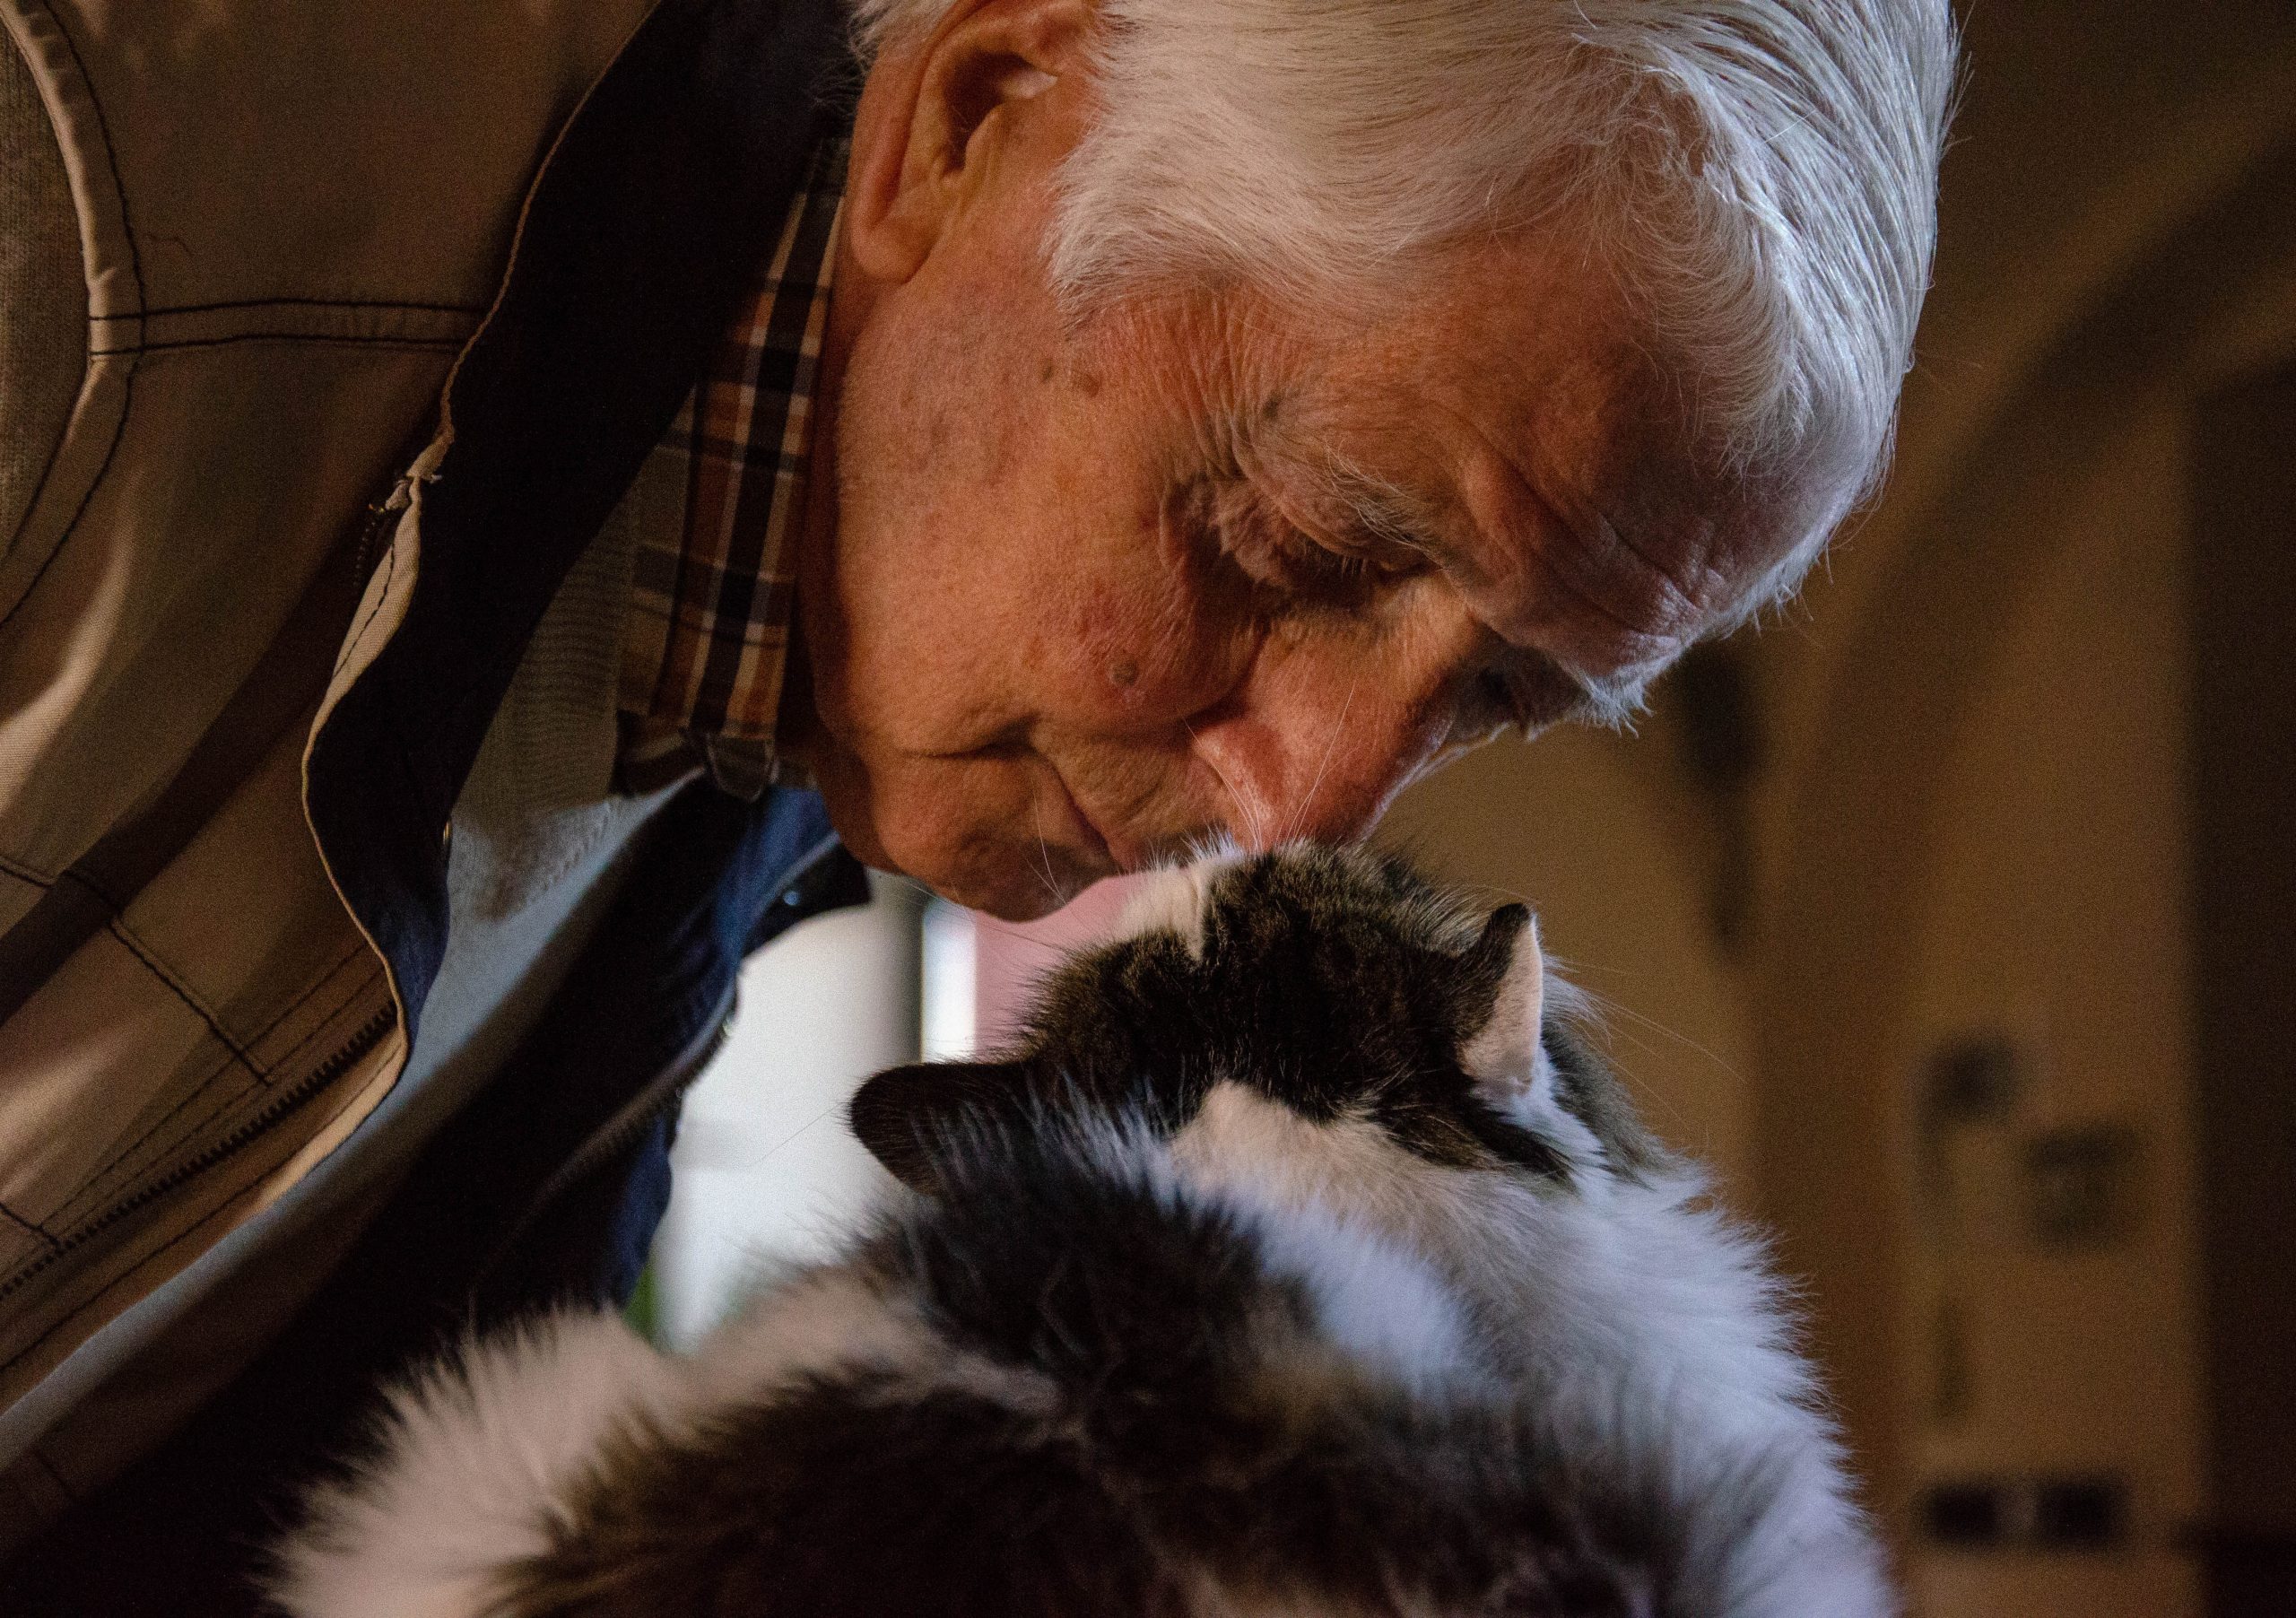 Elderly Senior With His Cat